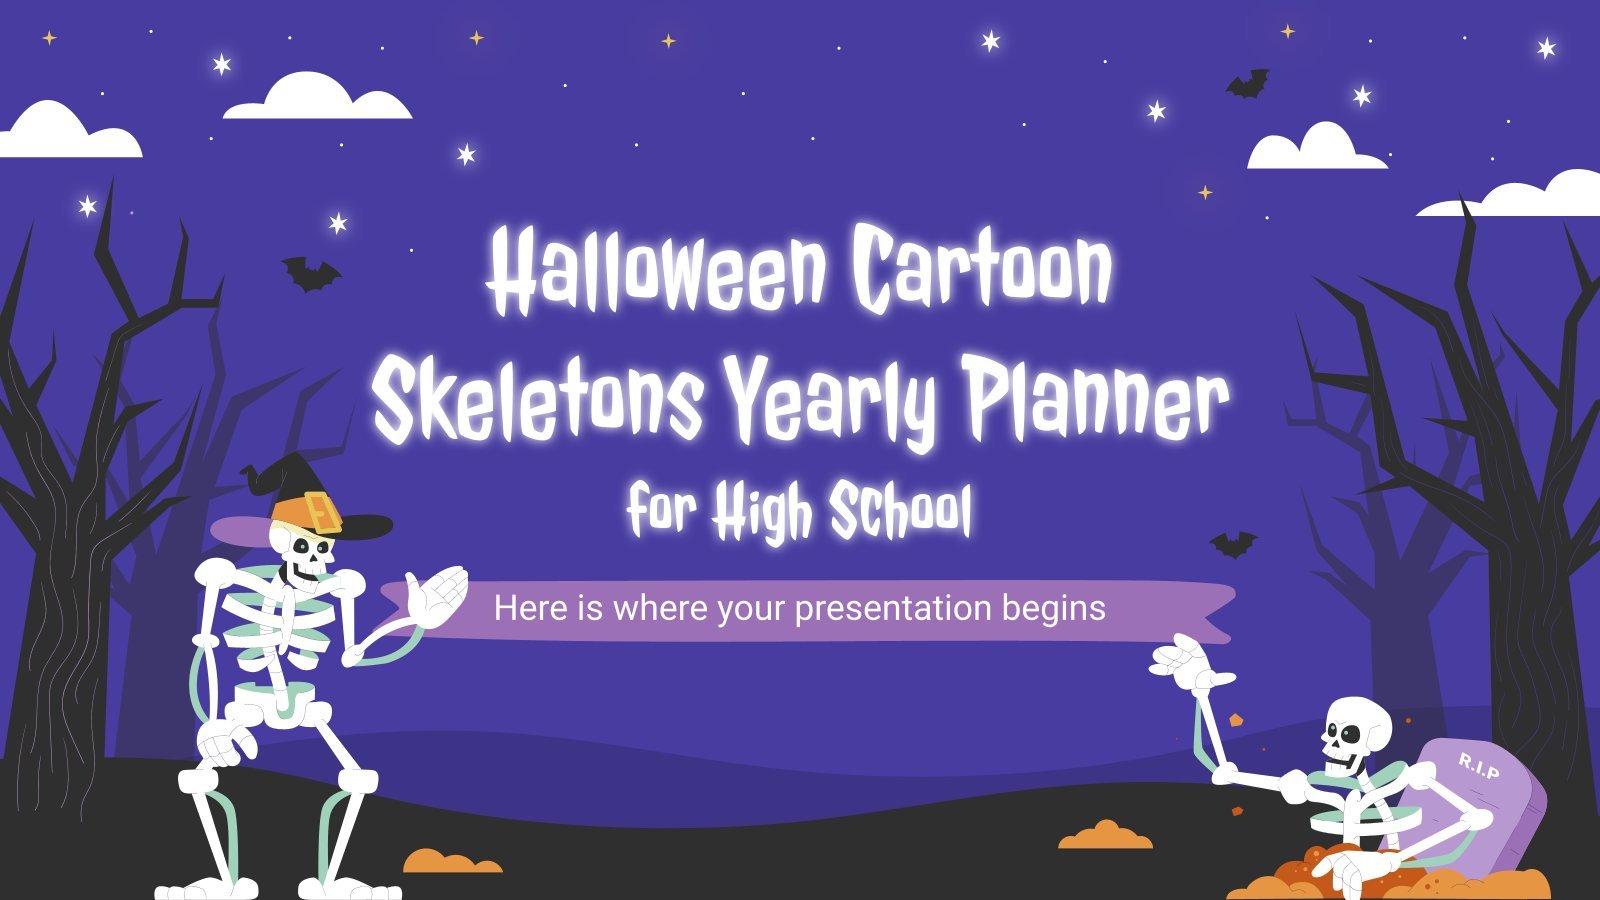 Halloween Cartoon Skeletons Yearly Planner for High School presentation template 